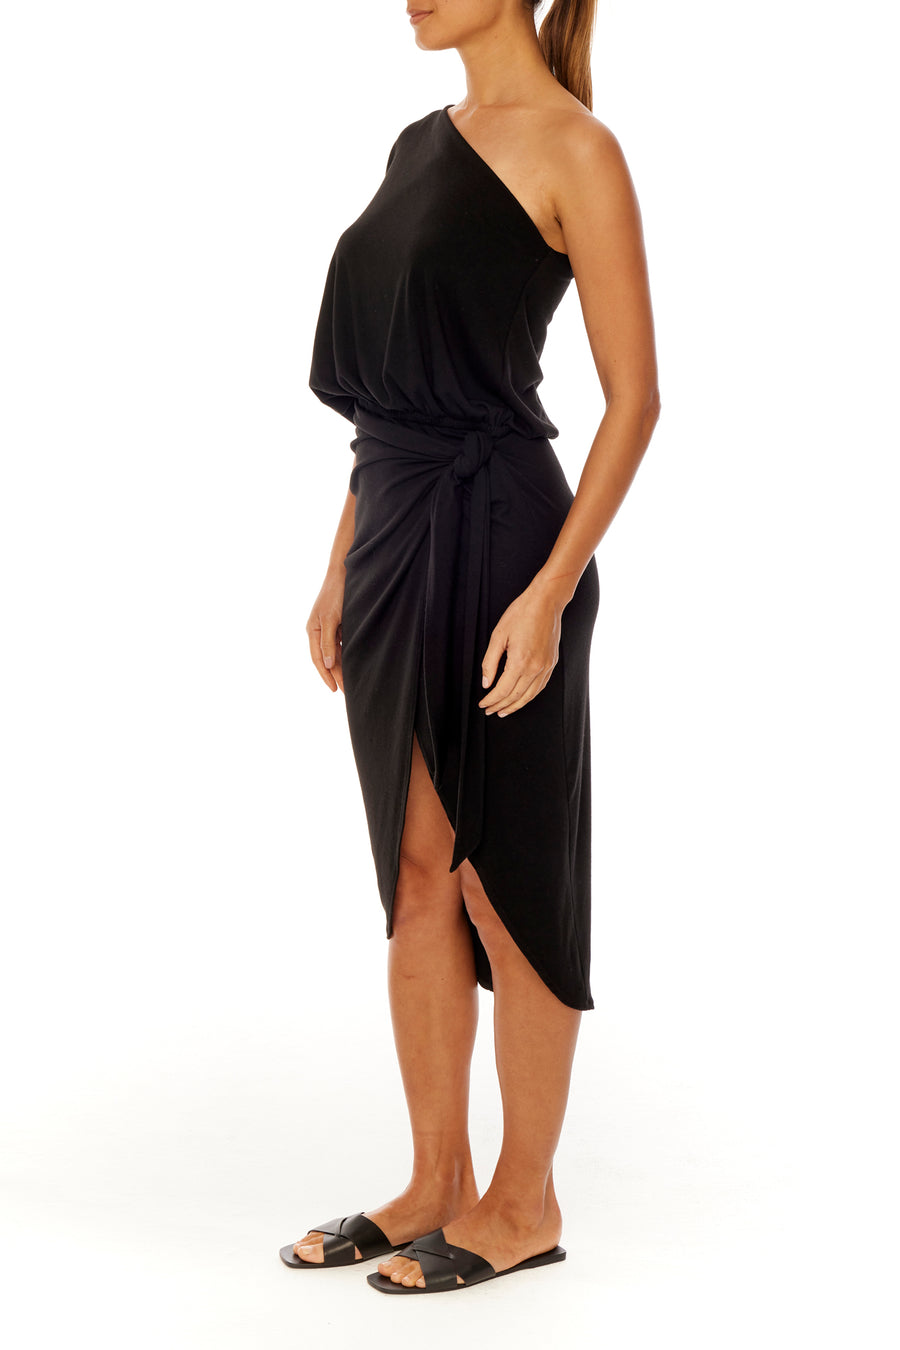 elegant one shoulder dress with draped top, wrap bottom, side tie and tulip hem in black